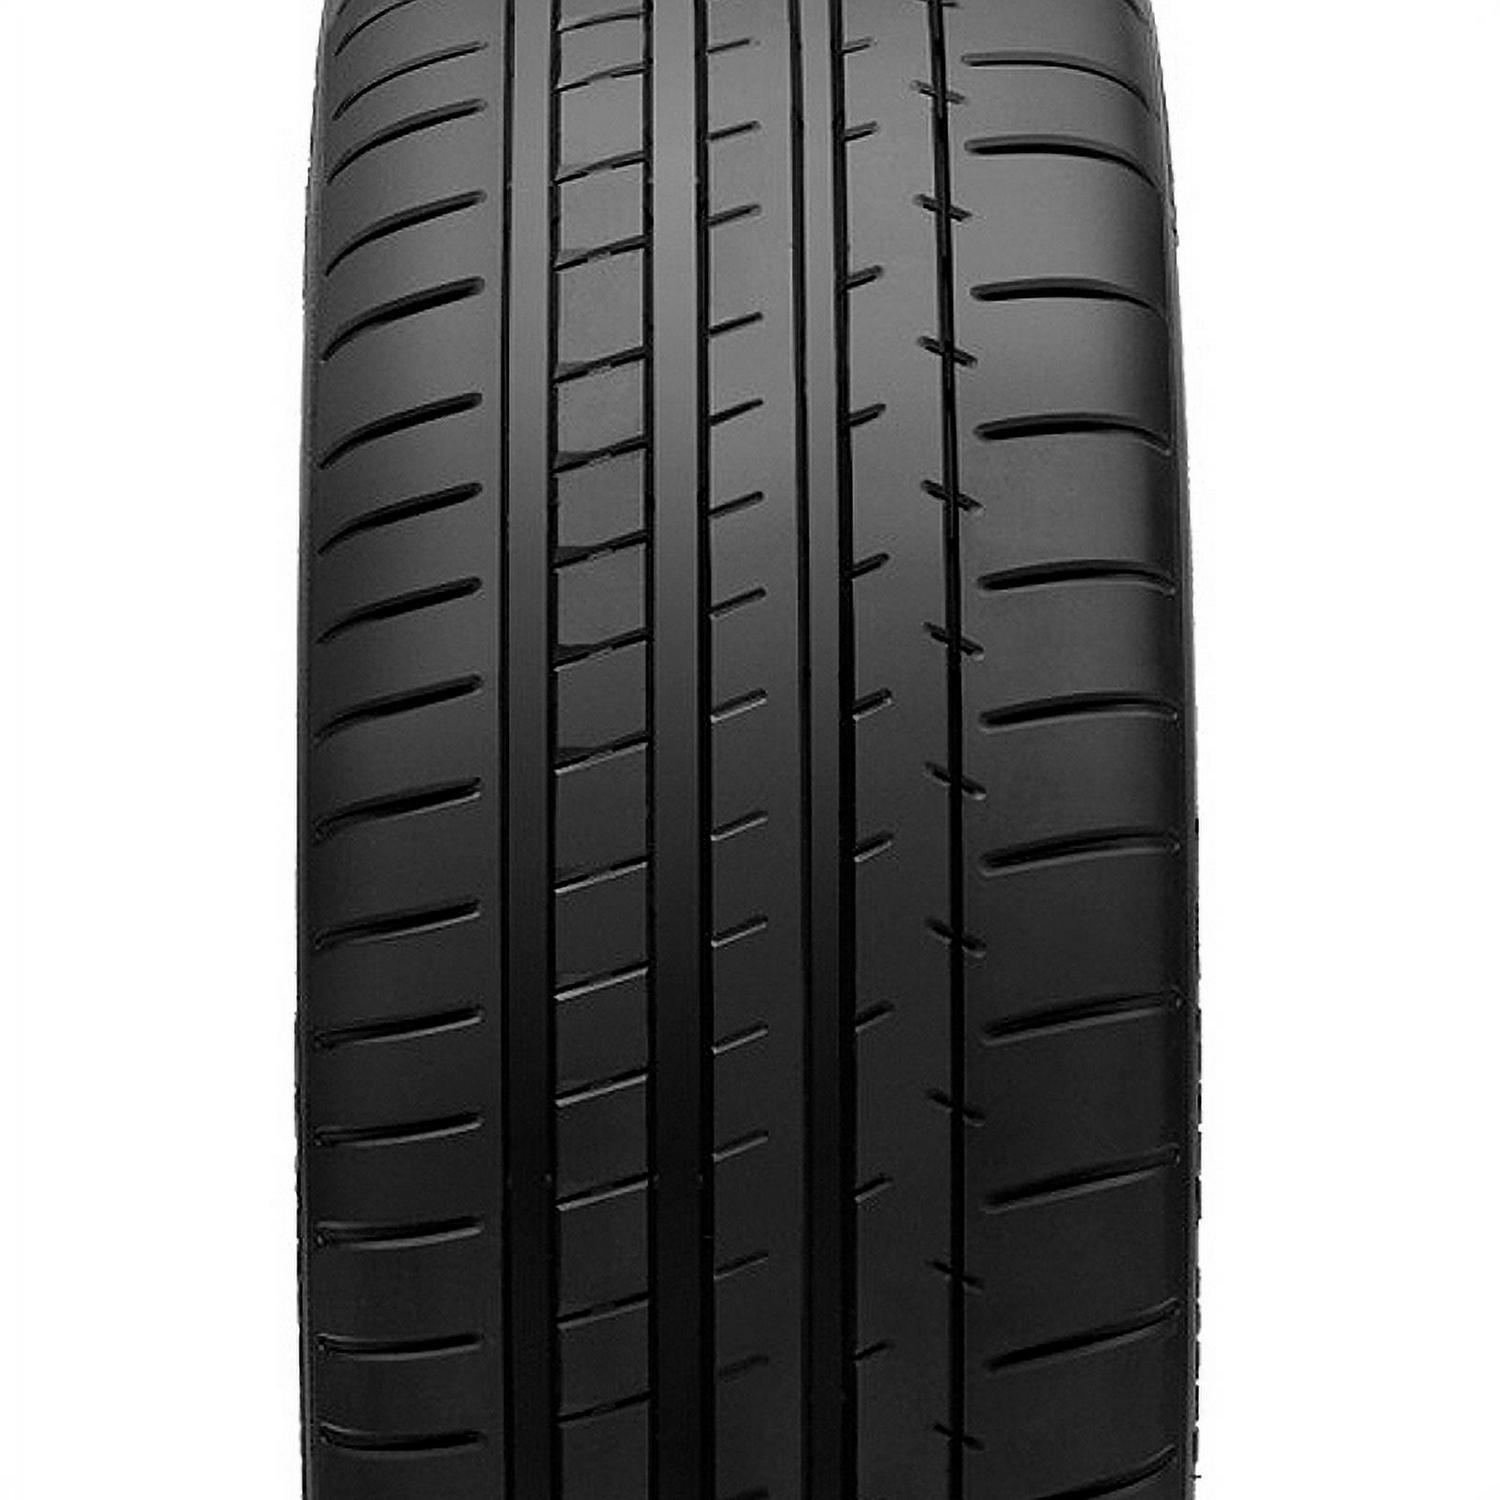 Michelin Pilot Super Sport Max Performance Tire P245/40ZR18 (93Y)